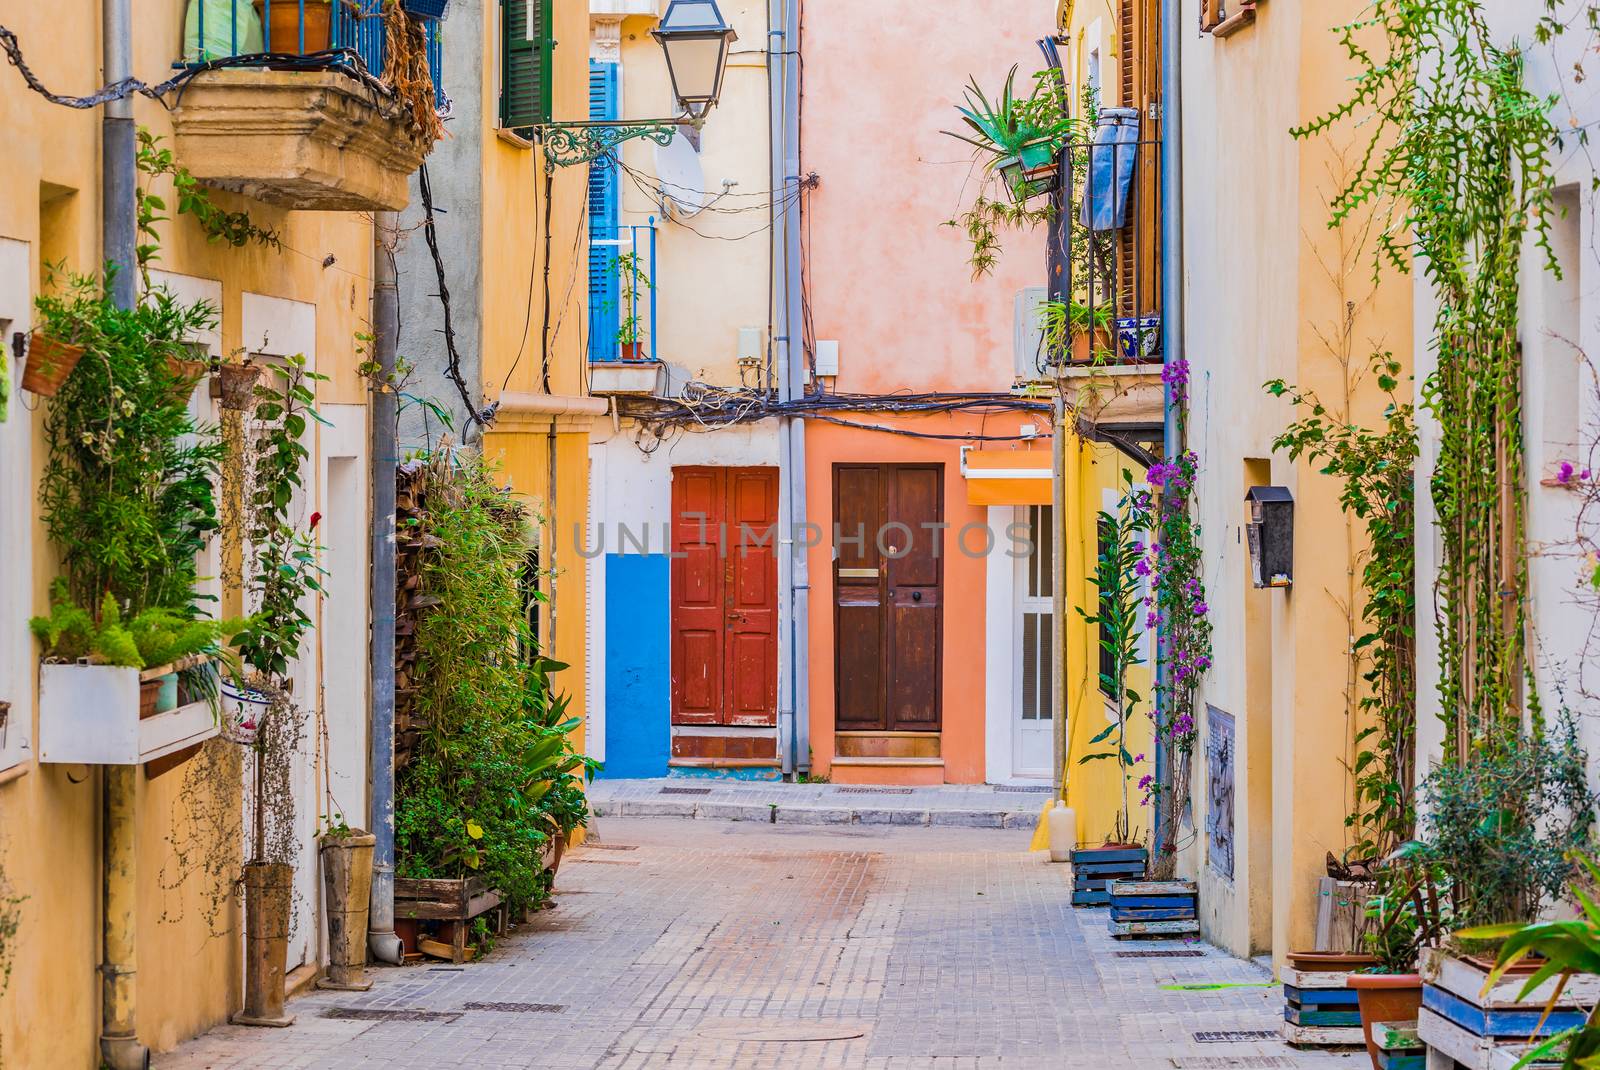 Colorful city of Palma de Majorca, Spain by Vulcano